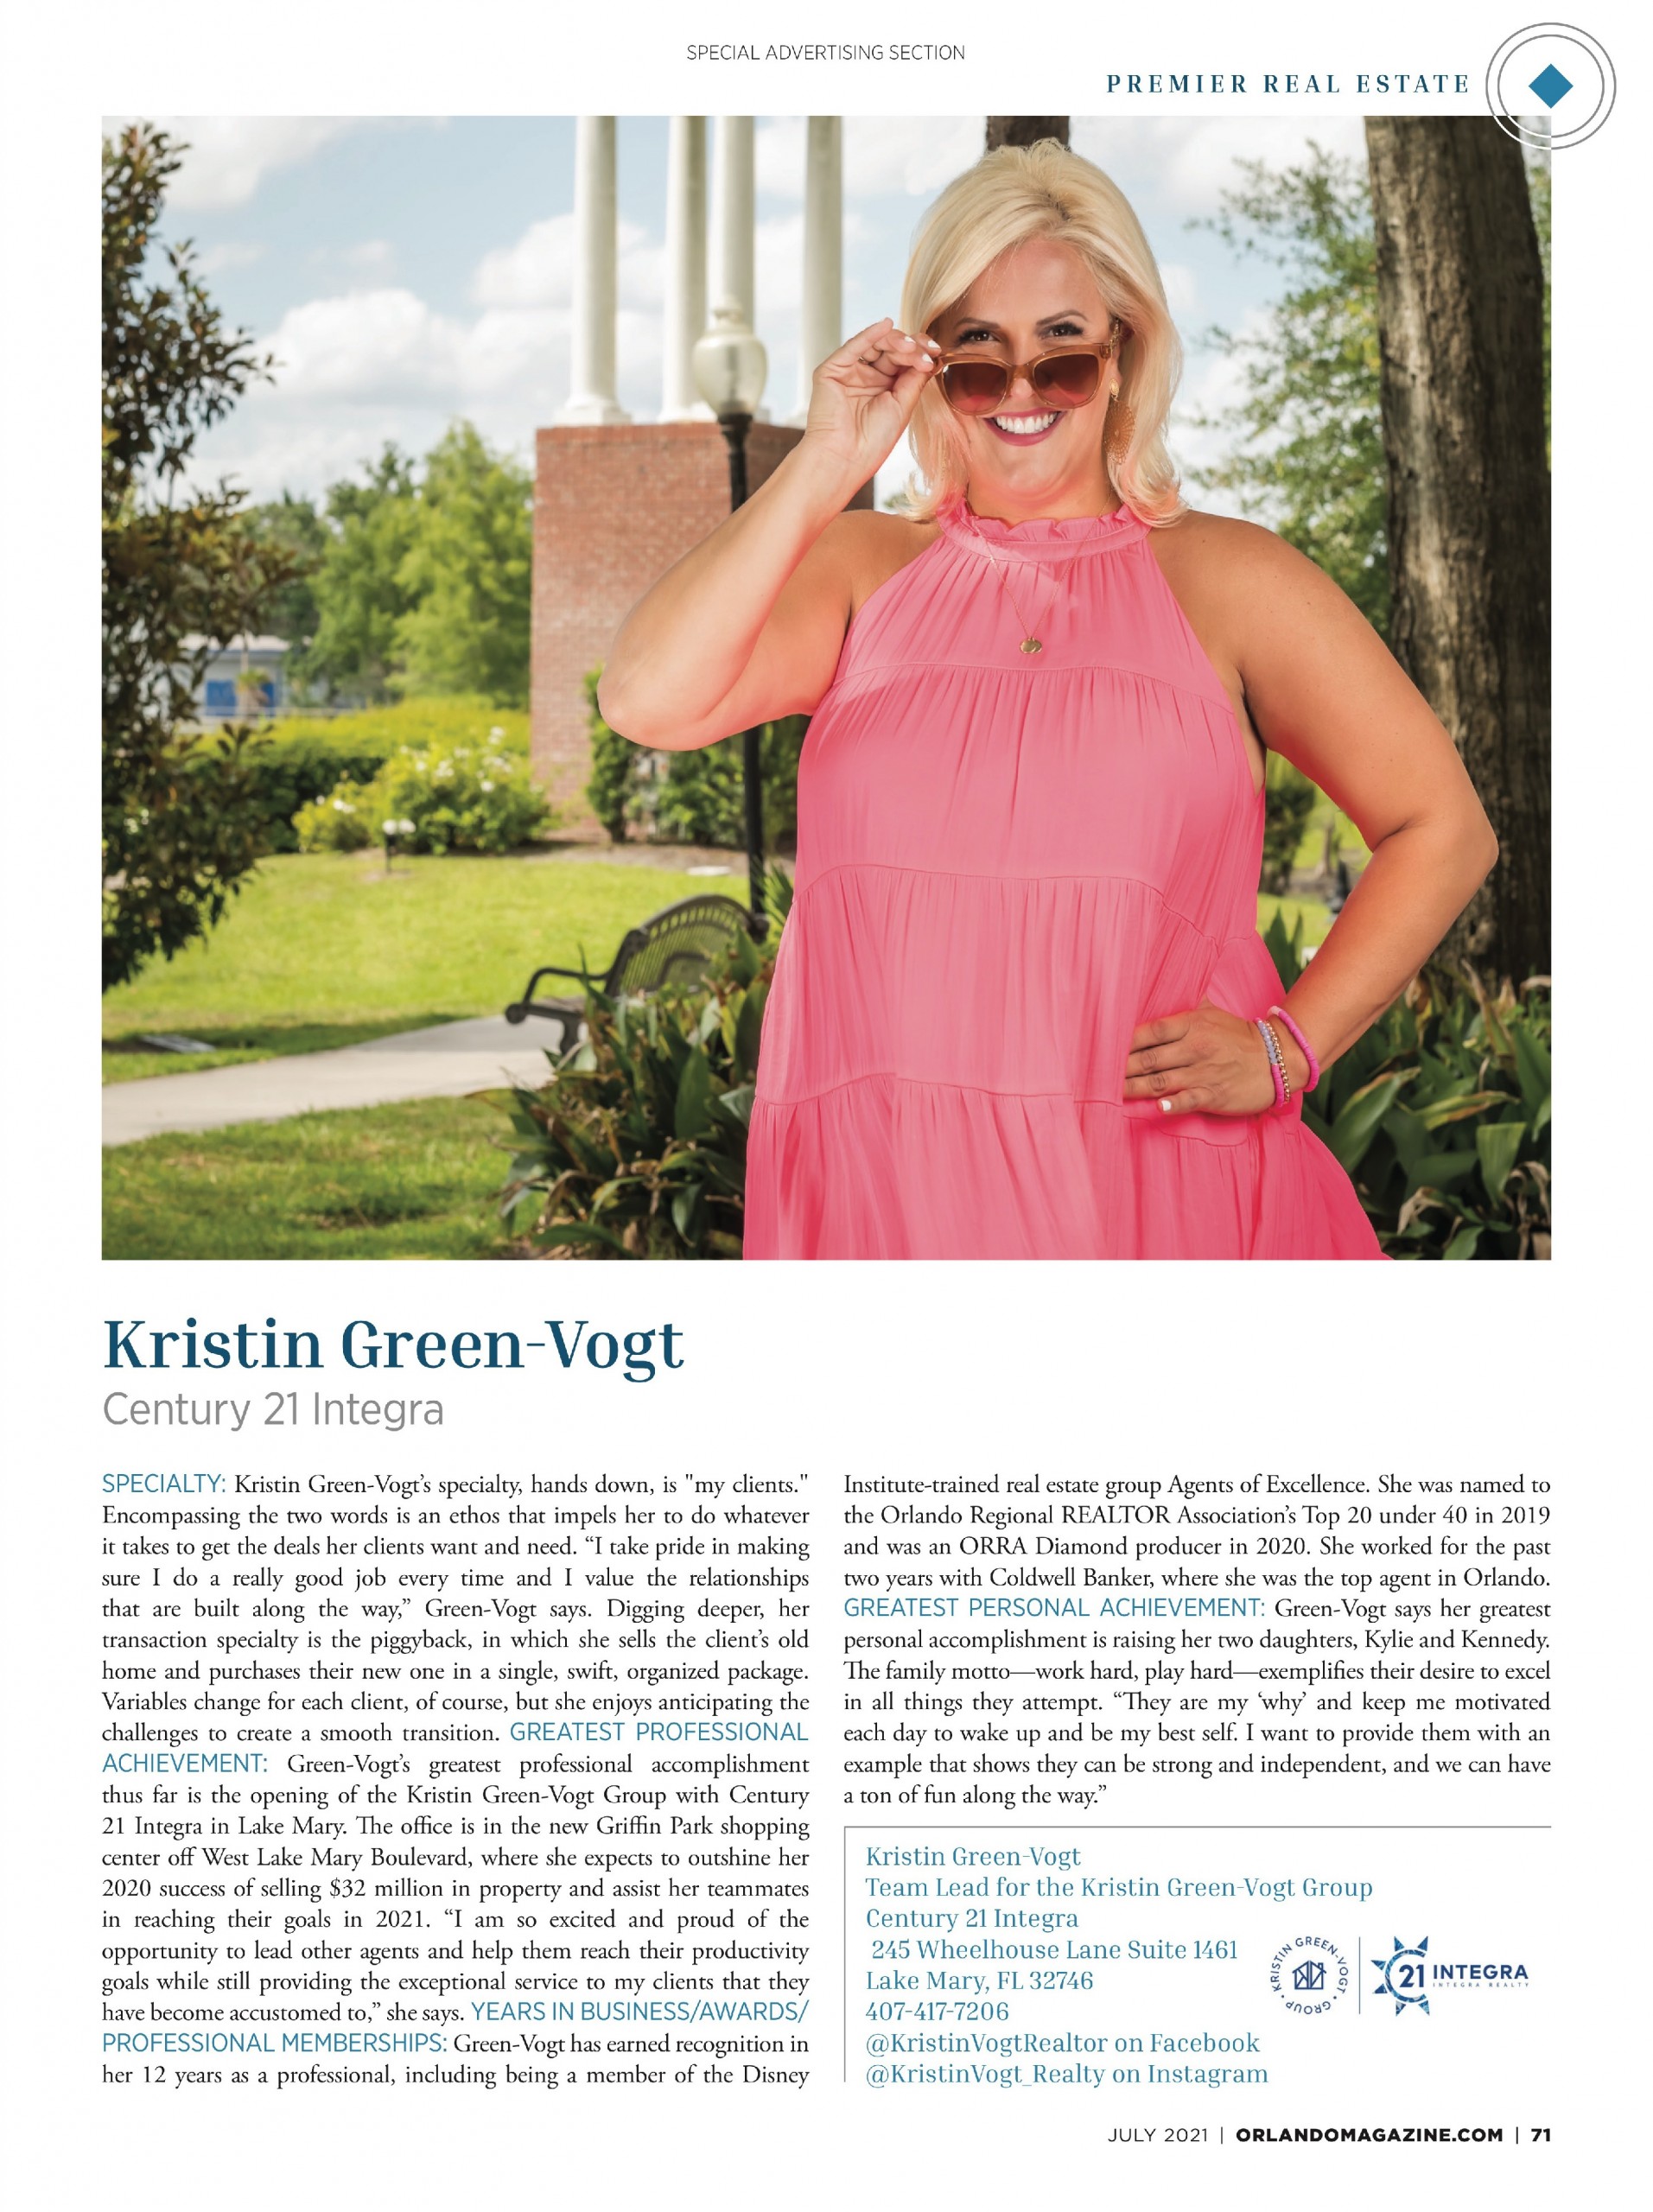 Green-Vogt, Kristin